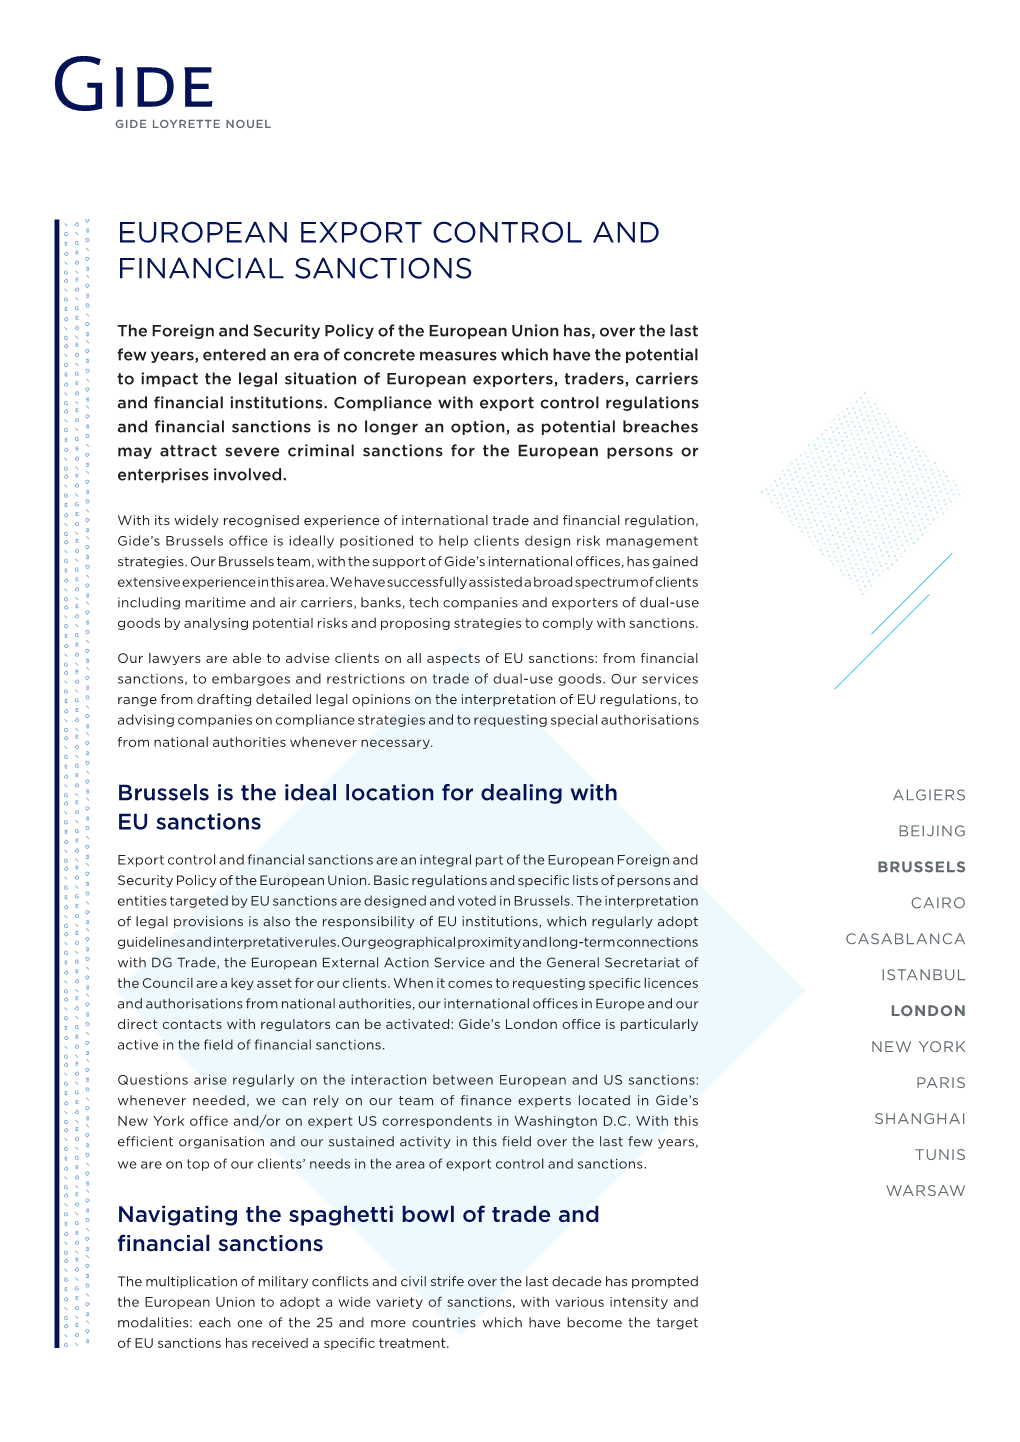 European Export Control and Financial Sanctions